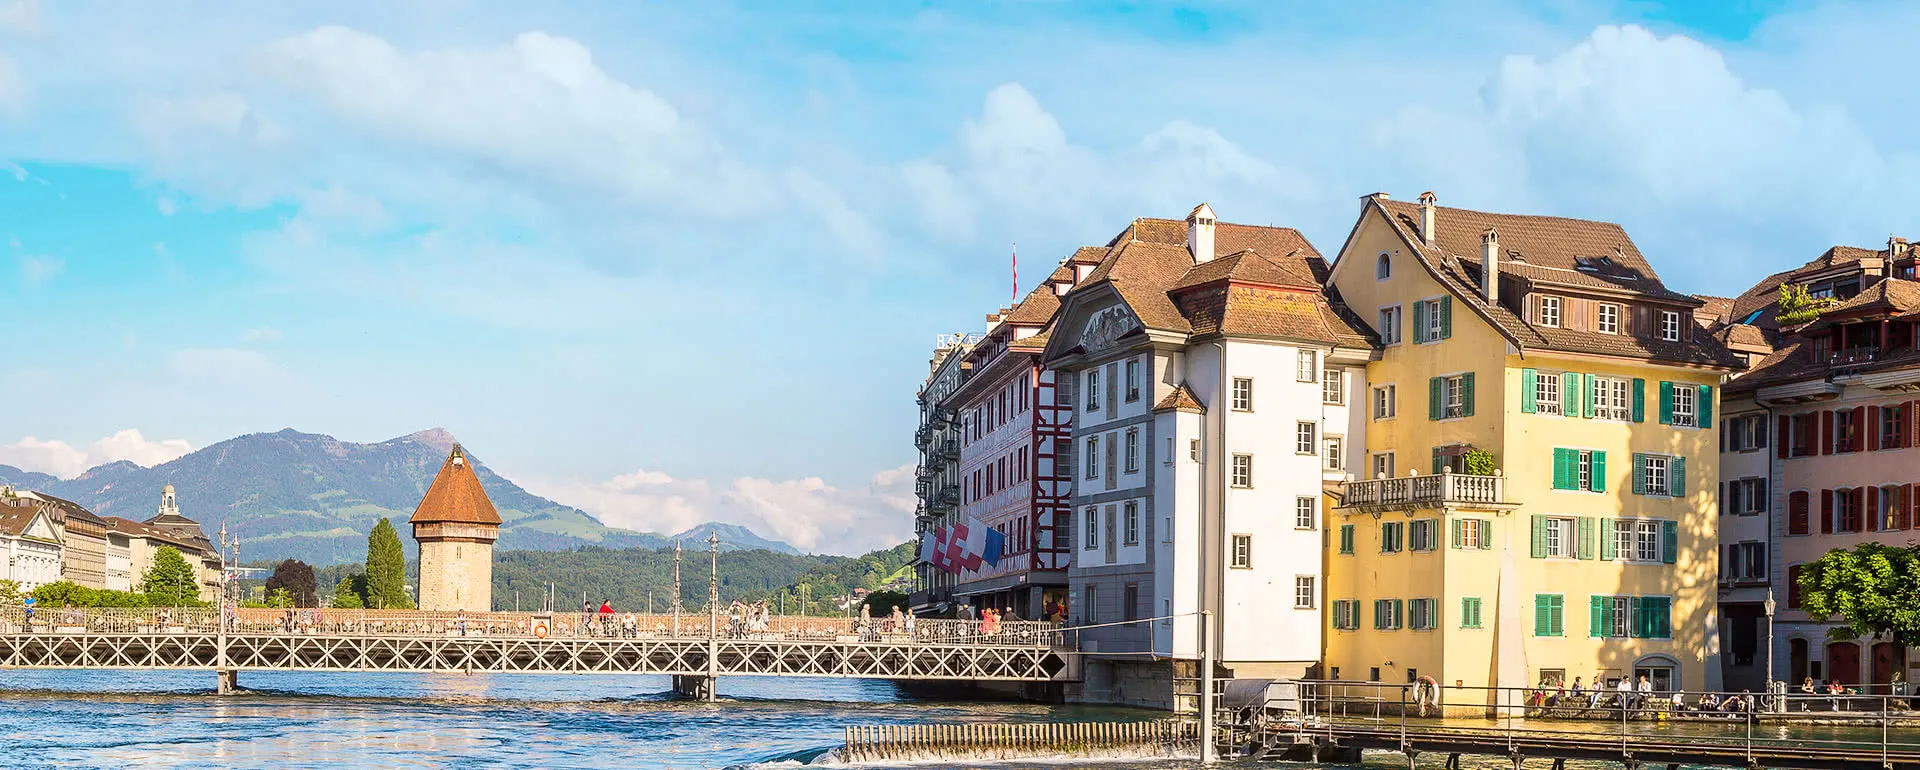 Luzern - the destination for school trips